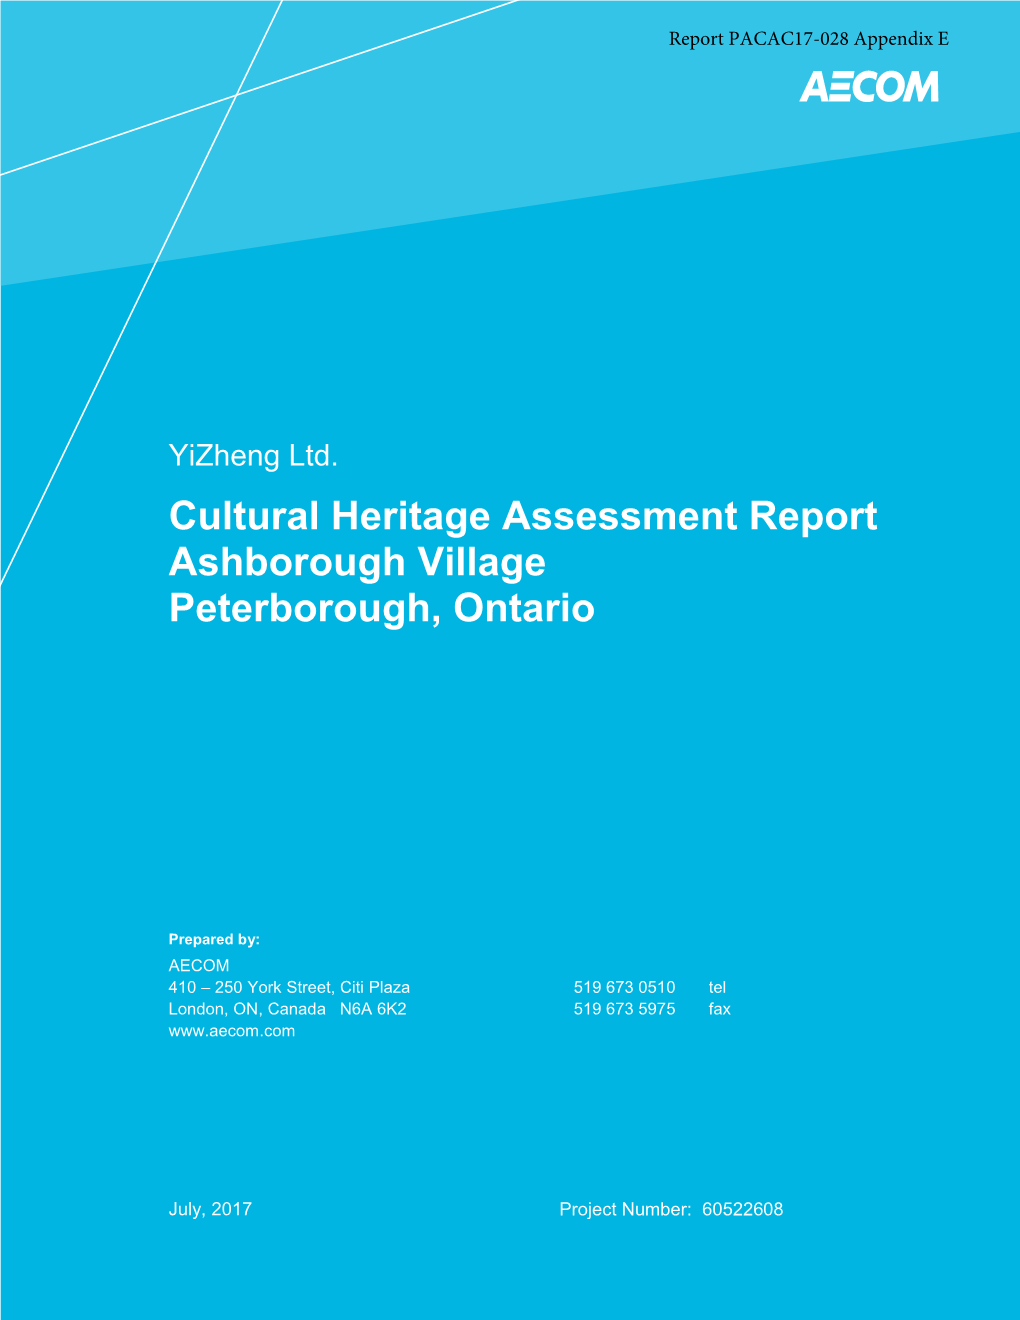 Cultural Heritage Assessment Report Ashborough Village Peterborough, Ontario